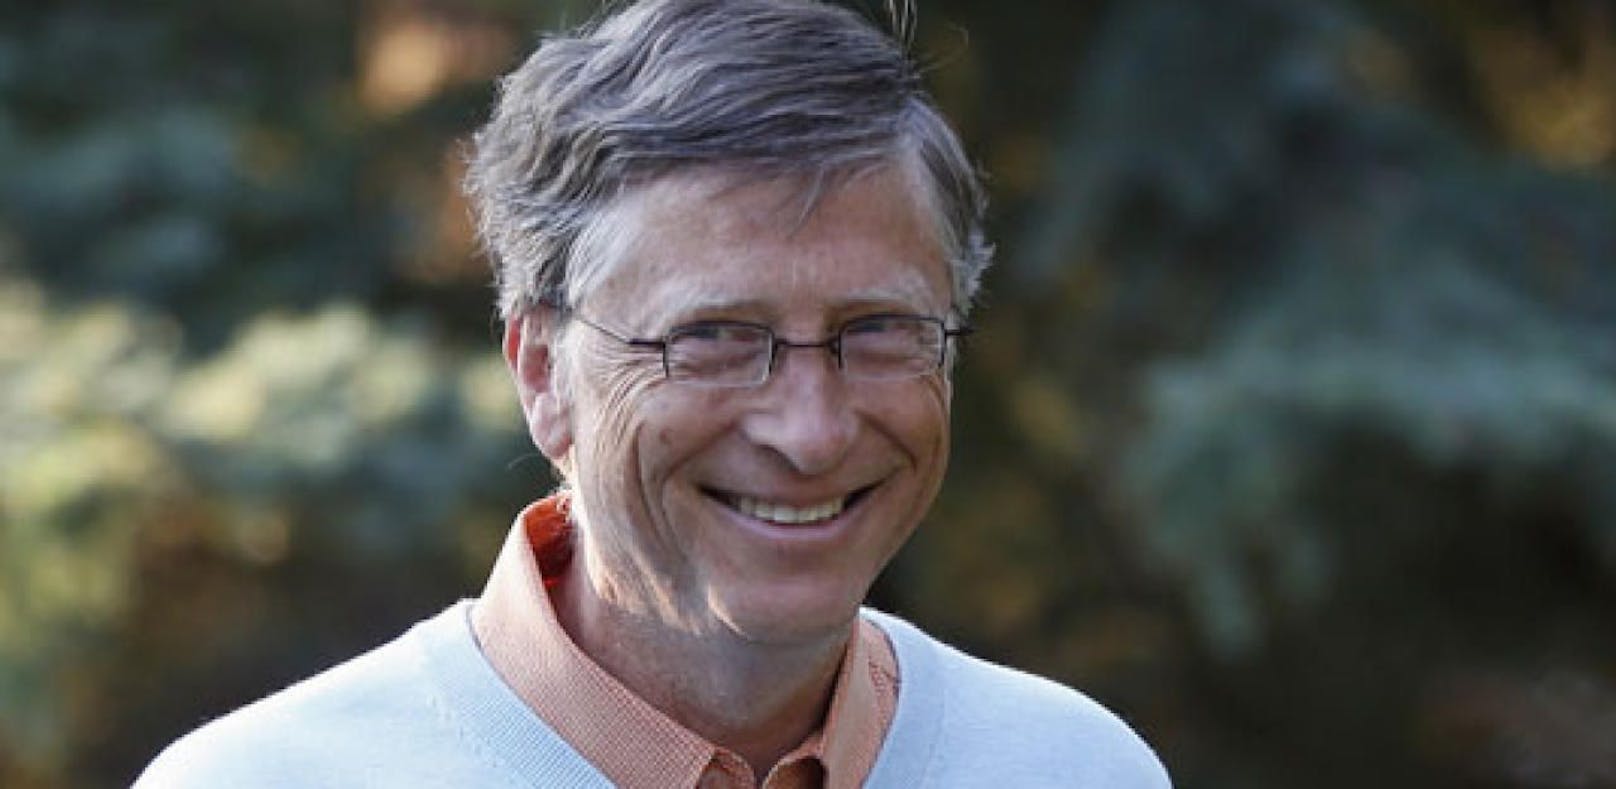 Bill Gates erhält Gastrolle bei "The Big Bang Theory"